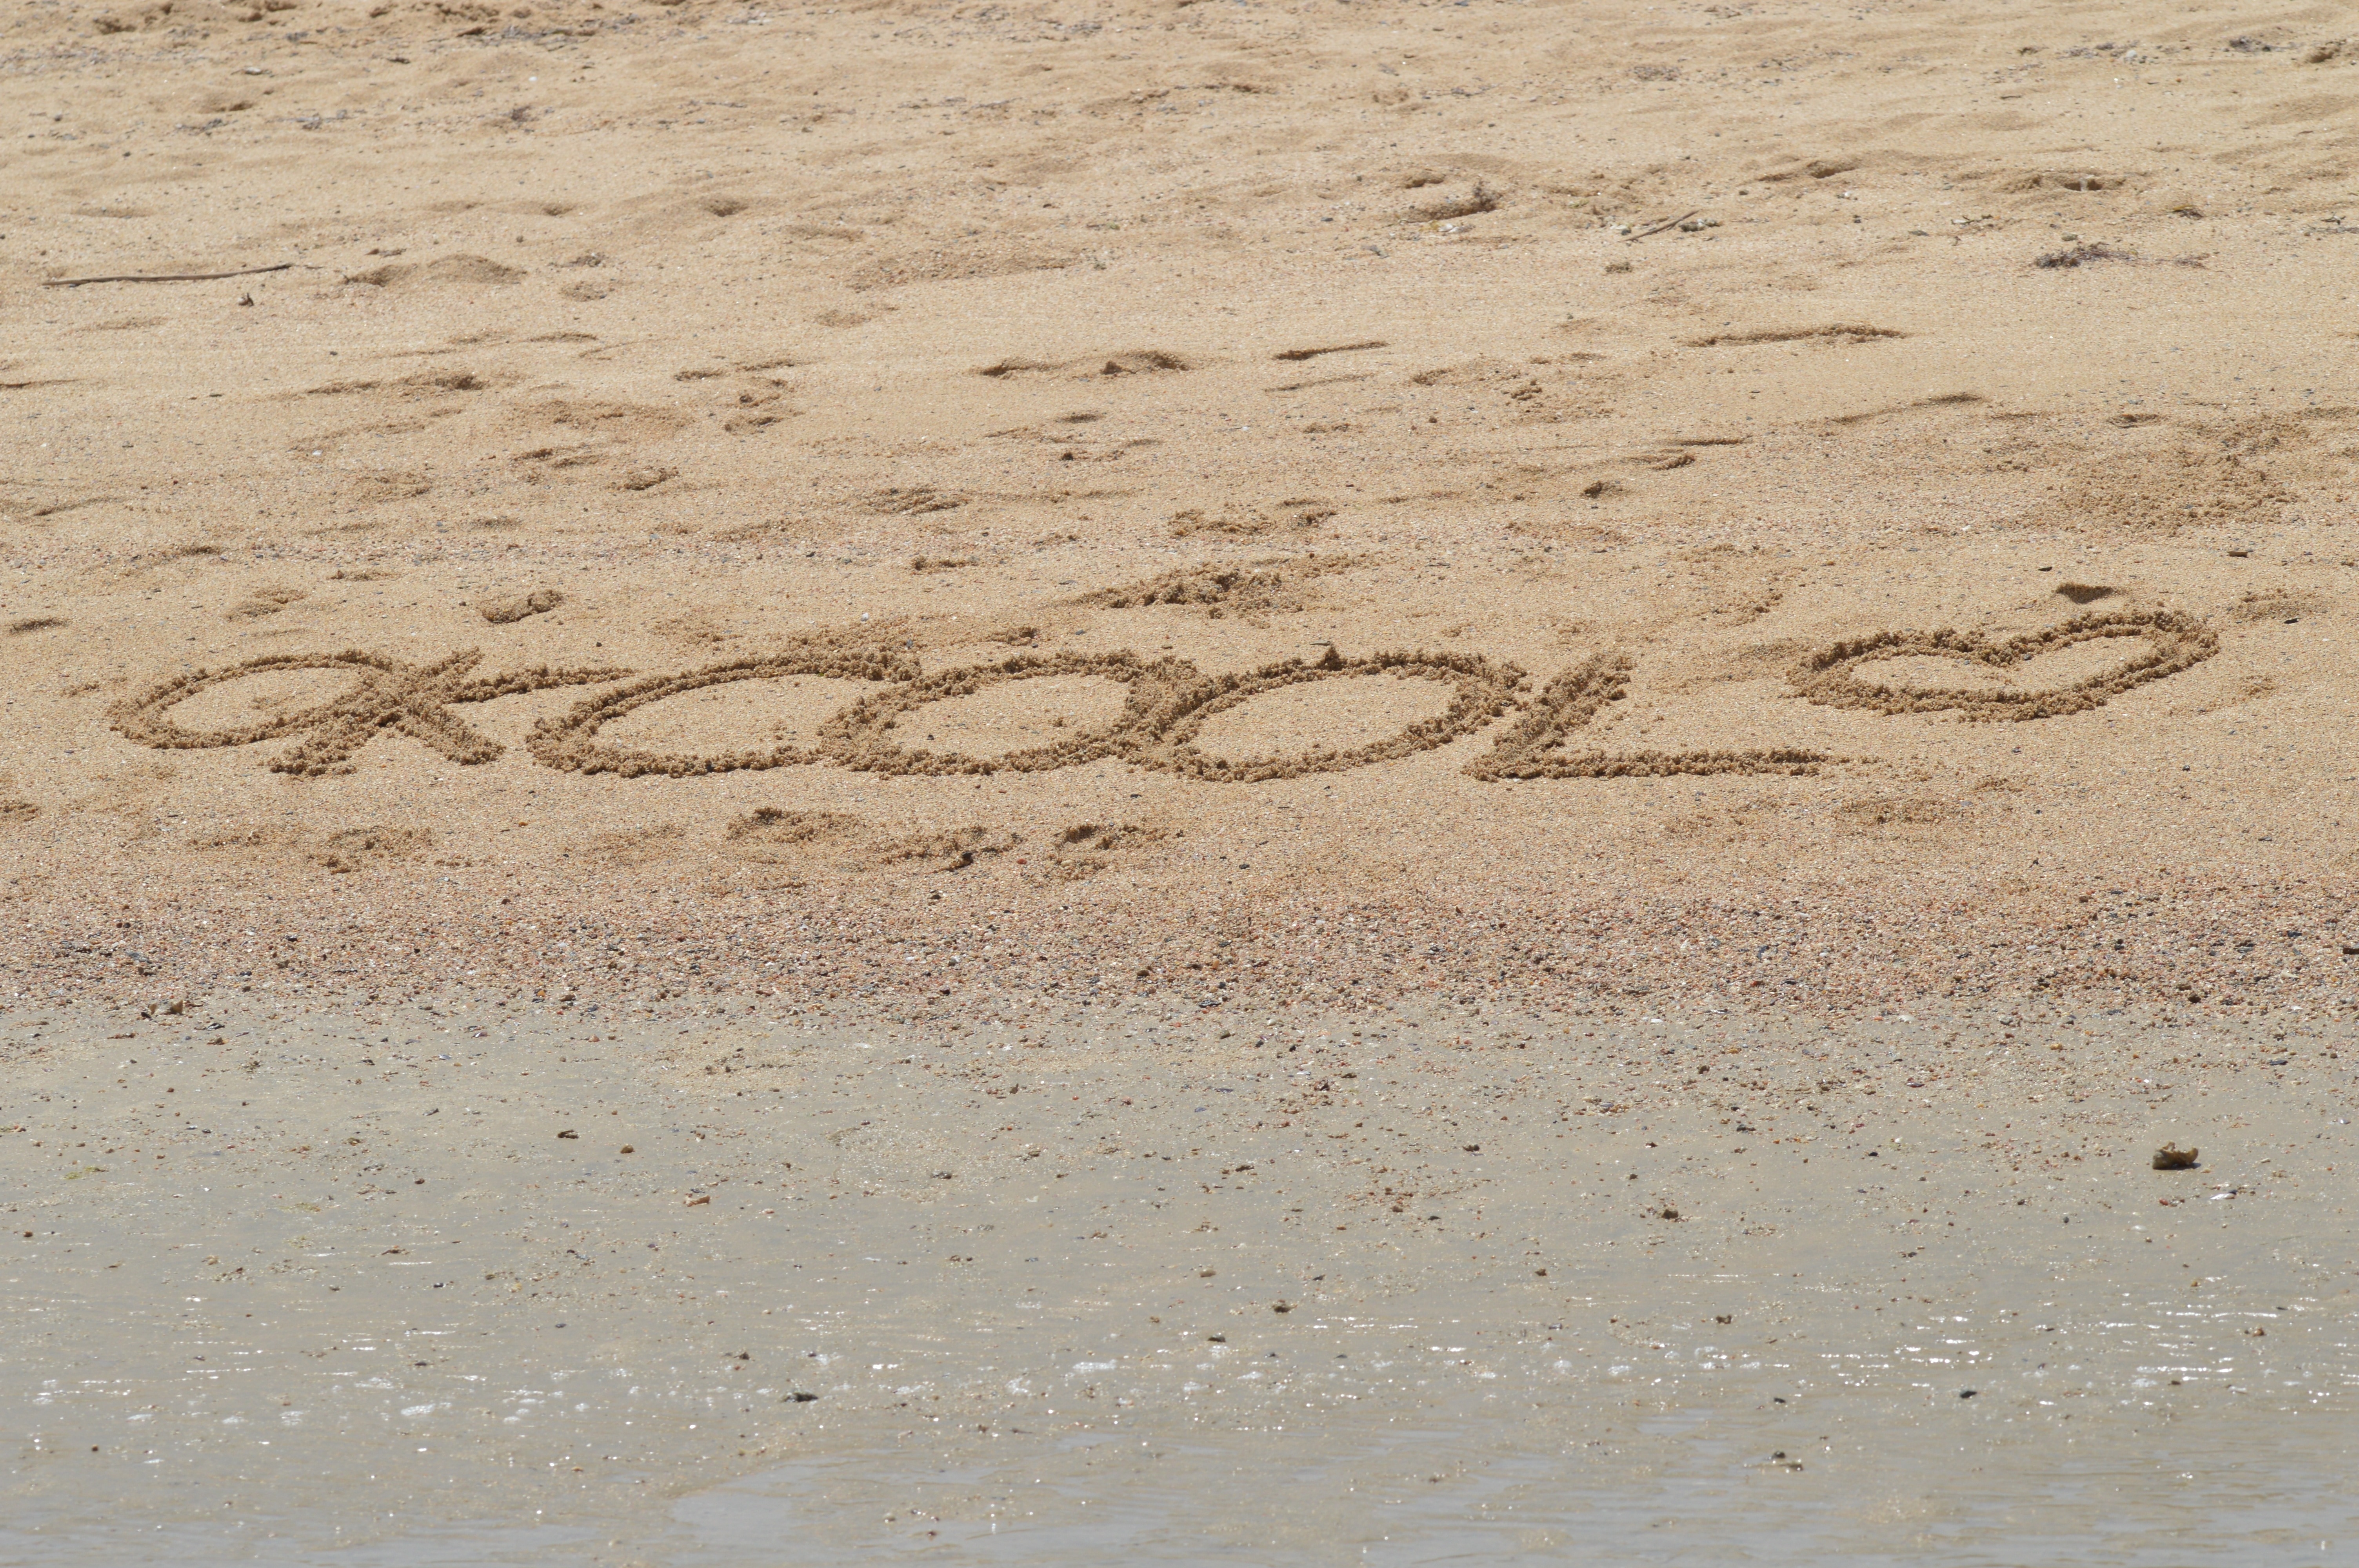 okcool written on sand